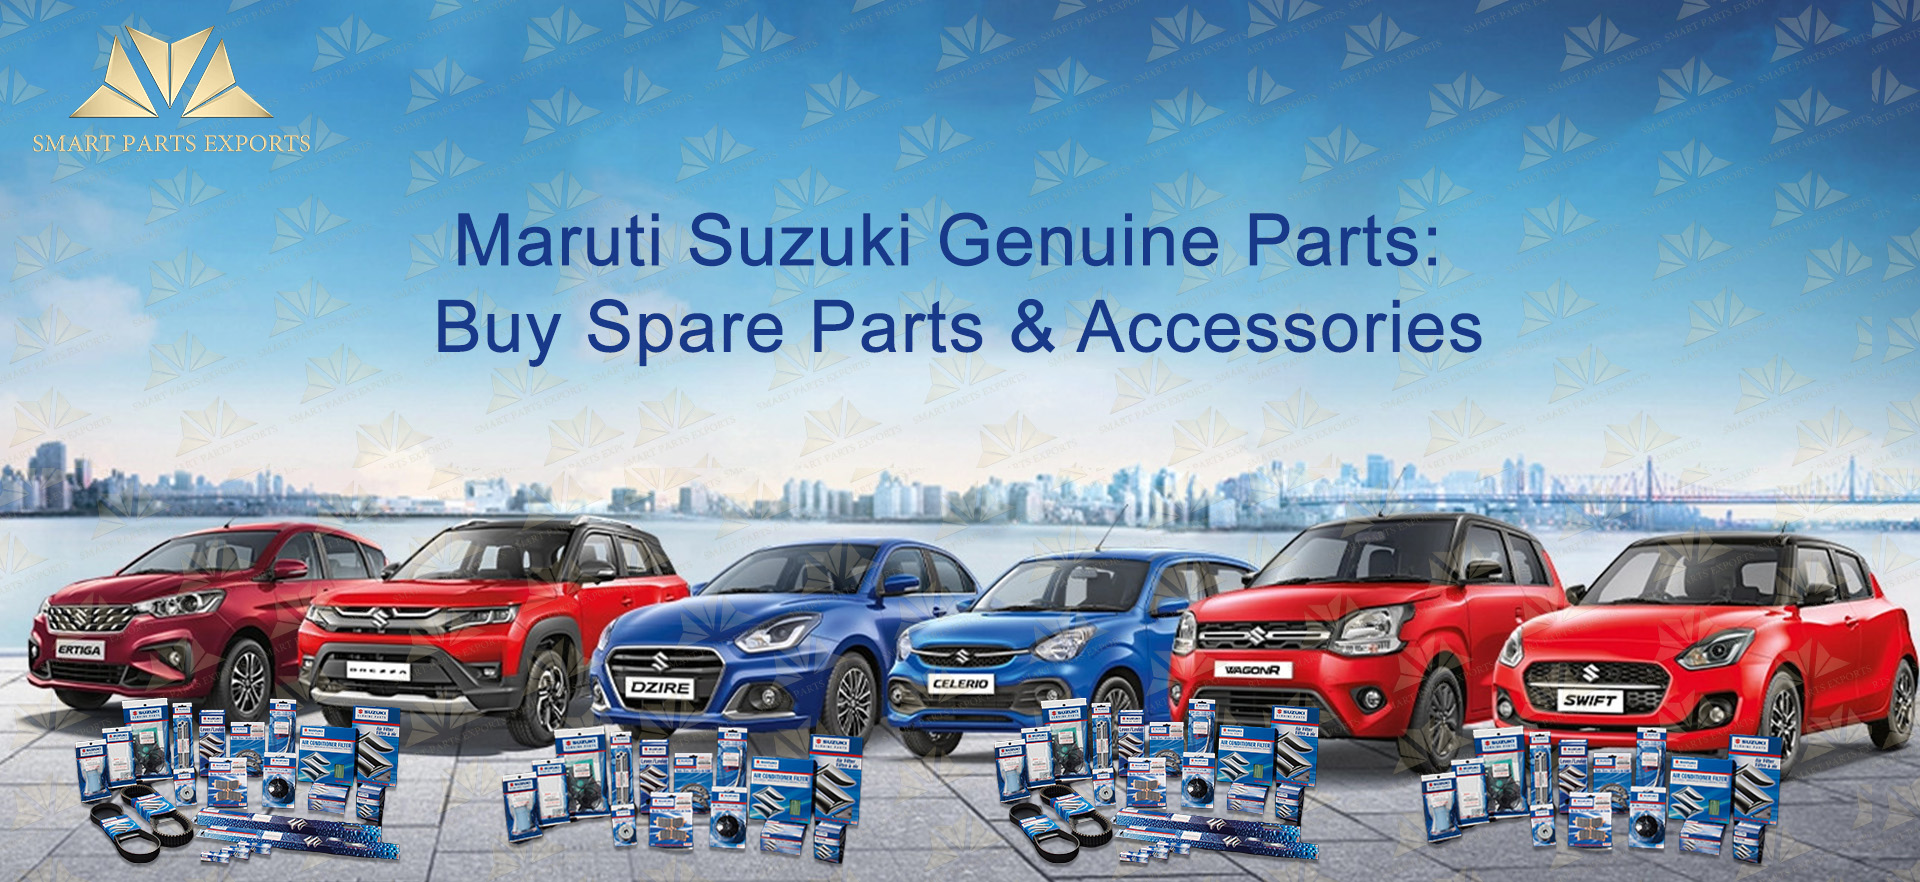 Maruti Suzuki Genuine Parts: Buy Spare Parts & Accessories